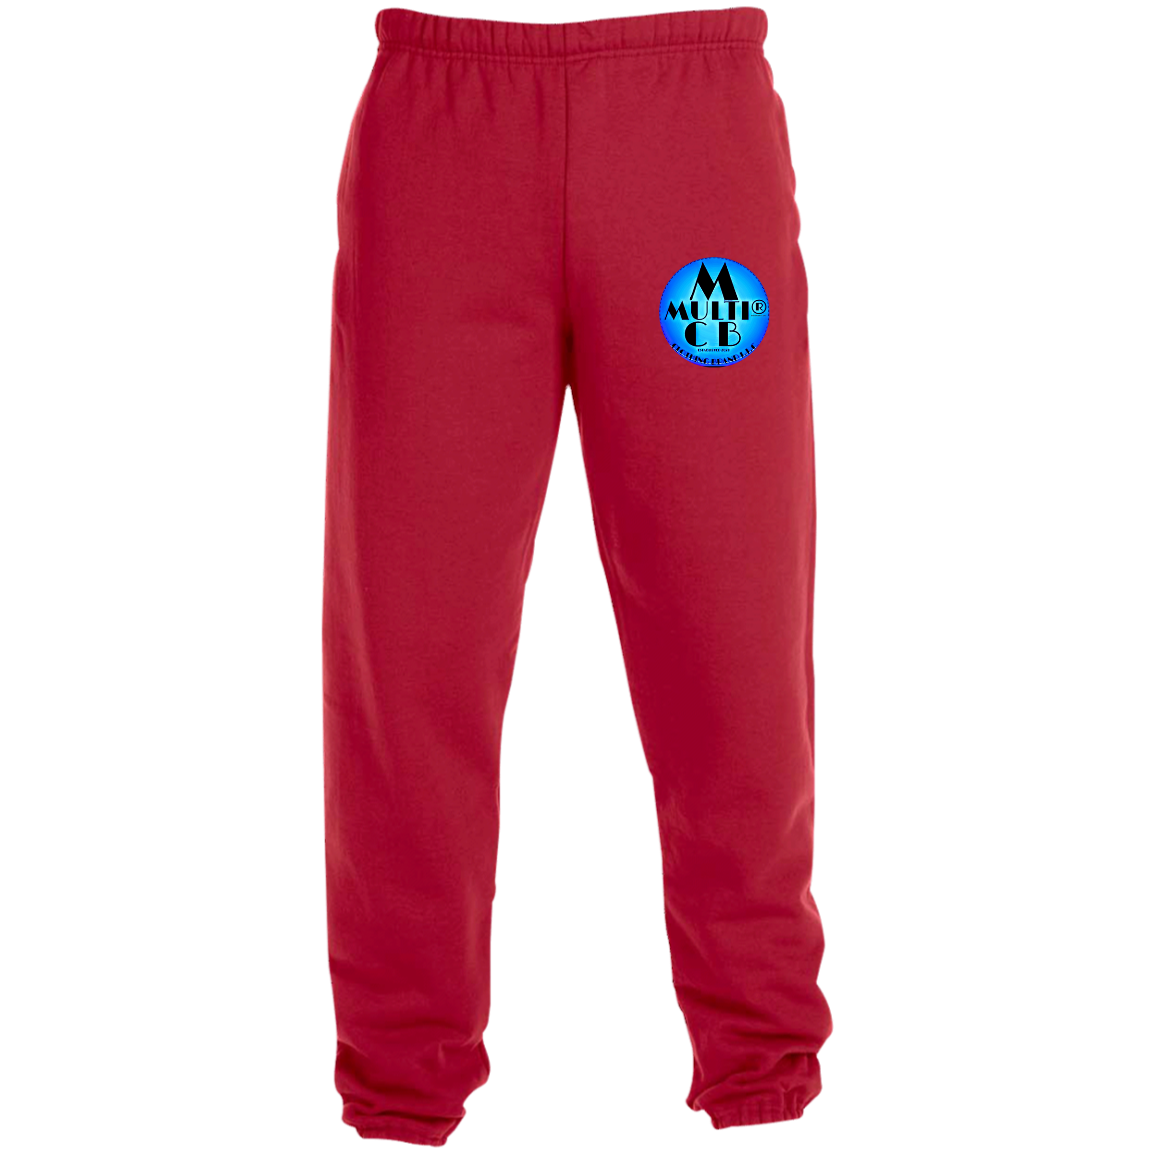 Multi Clothing Brand L.L.C - Sweatpants with Pockets CustomCat